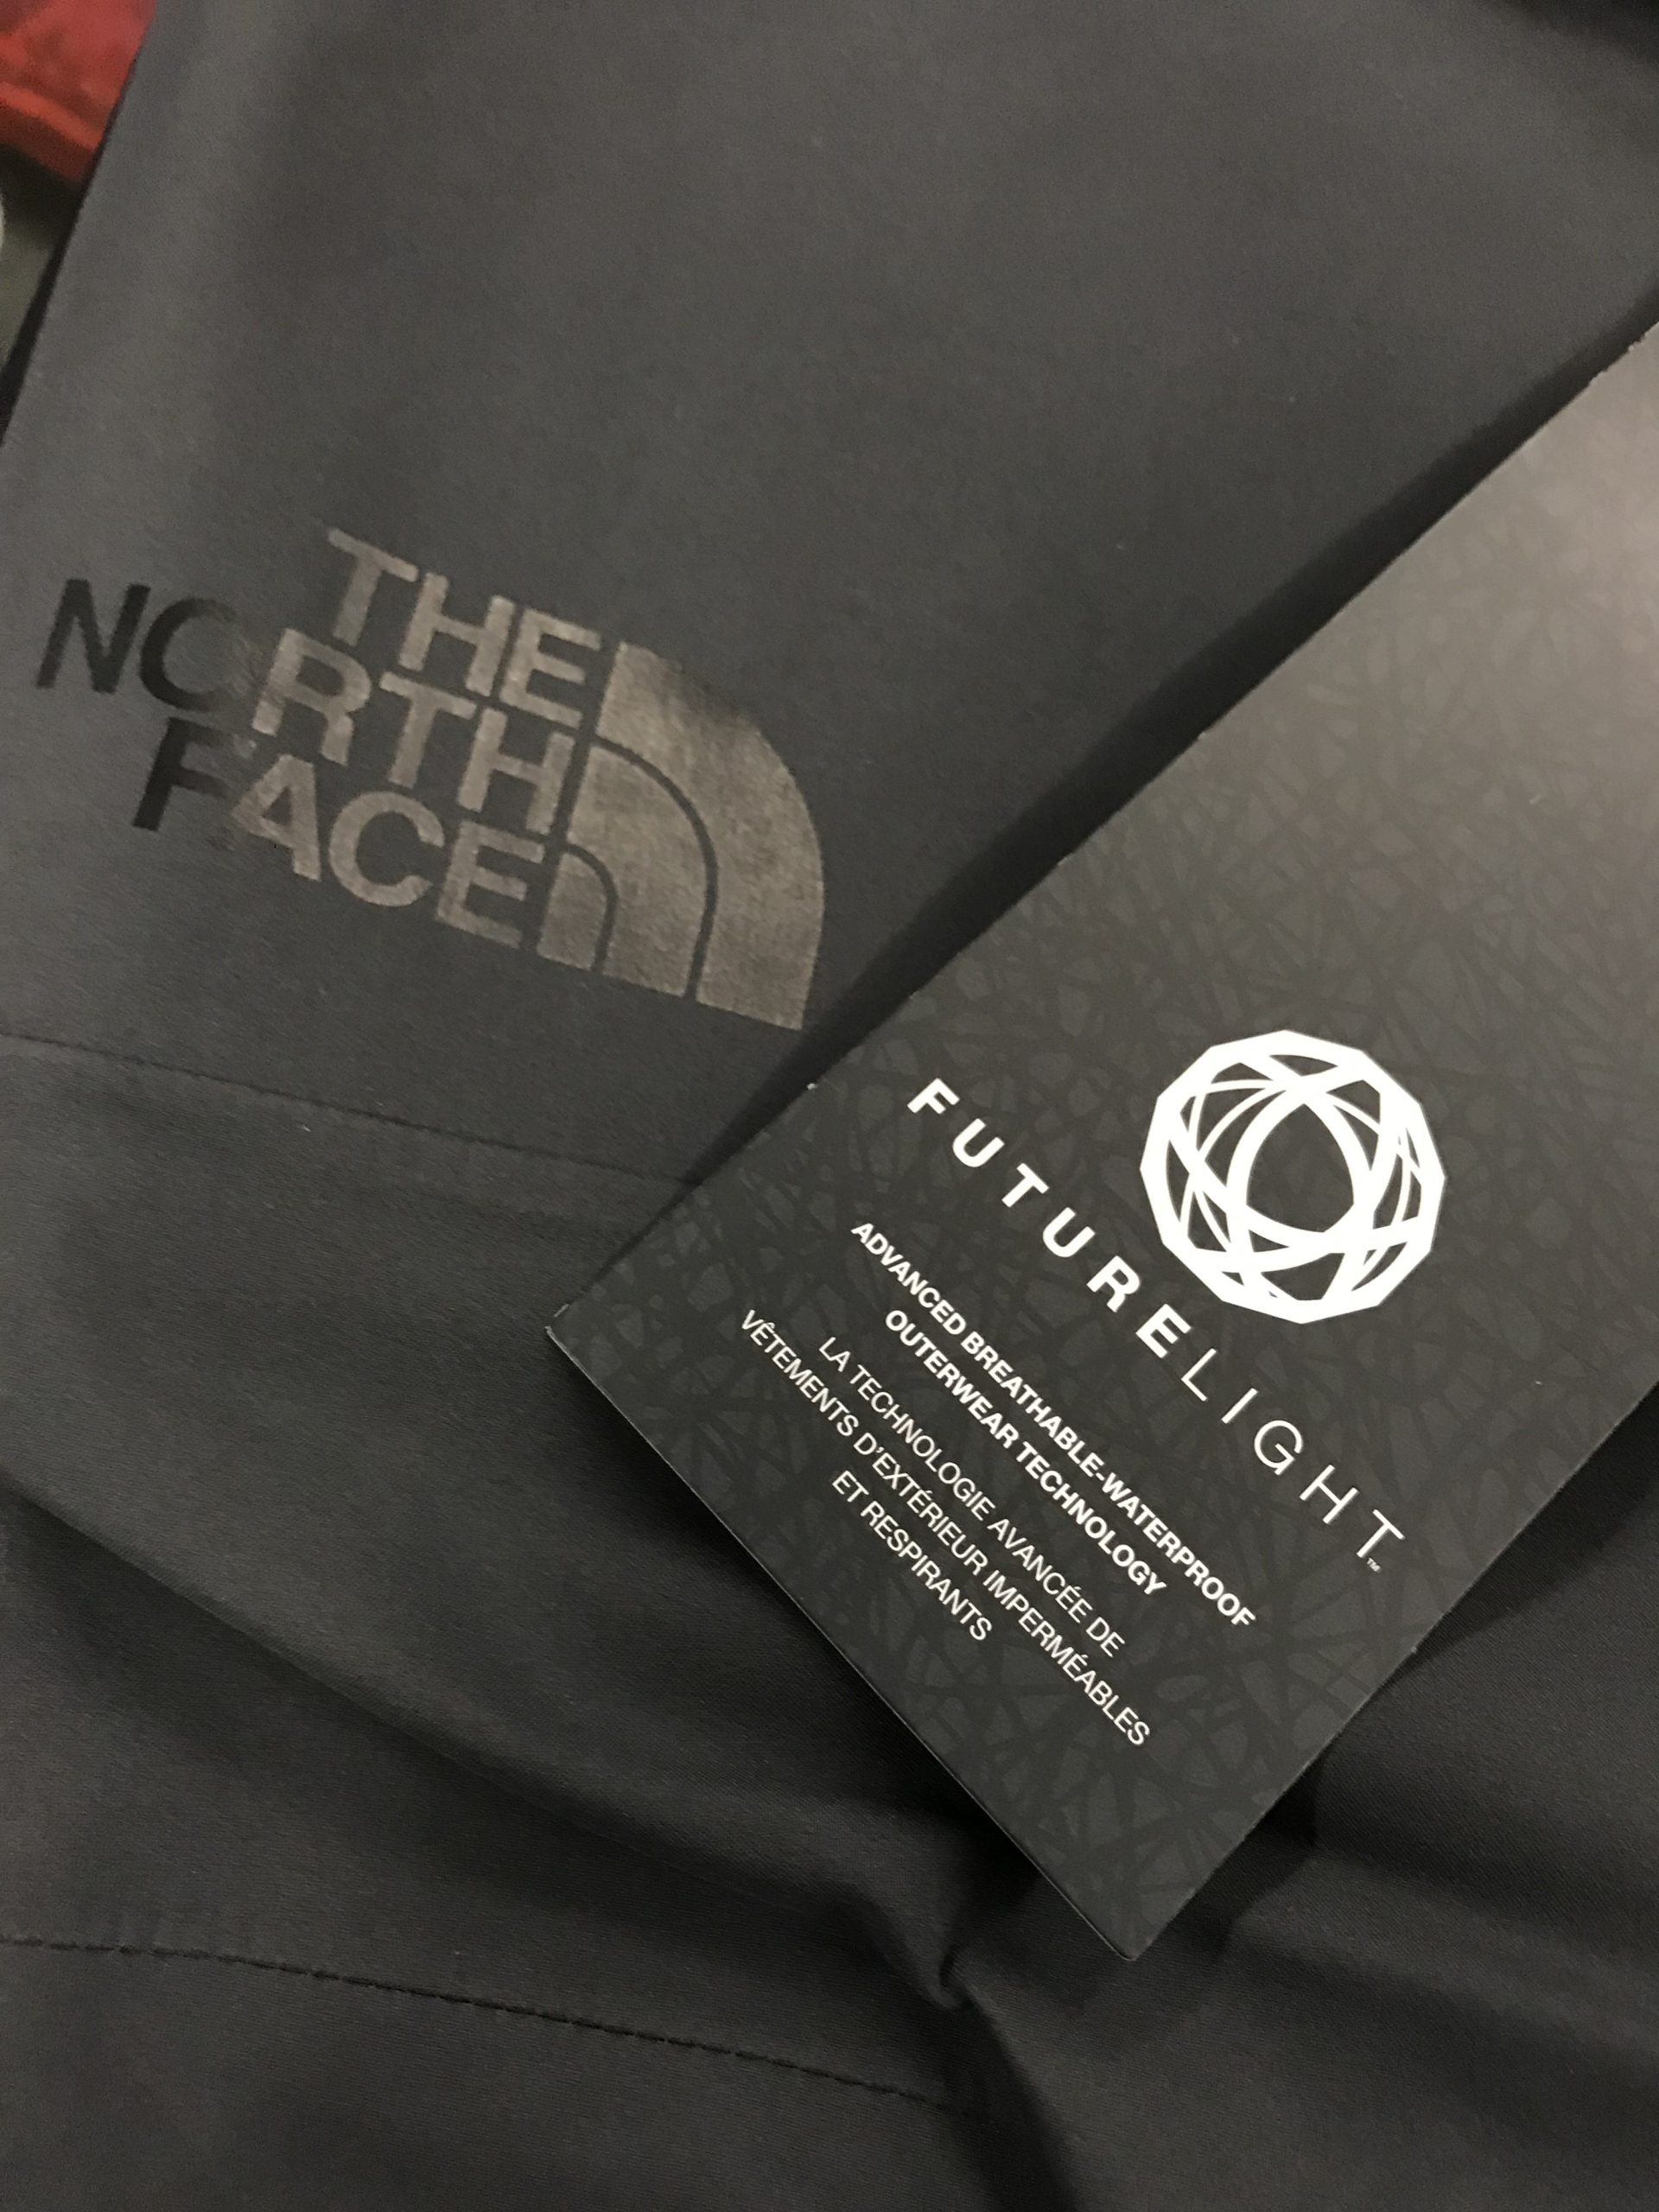 THE NORTH FACE] 【A-CAD Bib】 2019FW新商品『STEEP SERIES』{NS51917